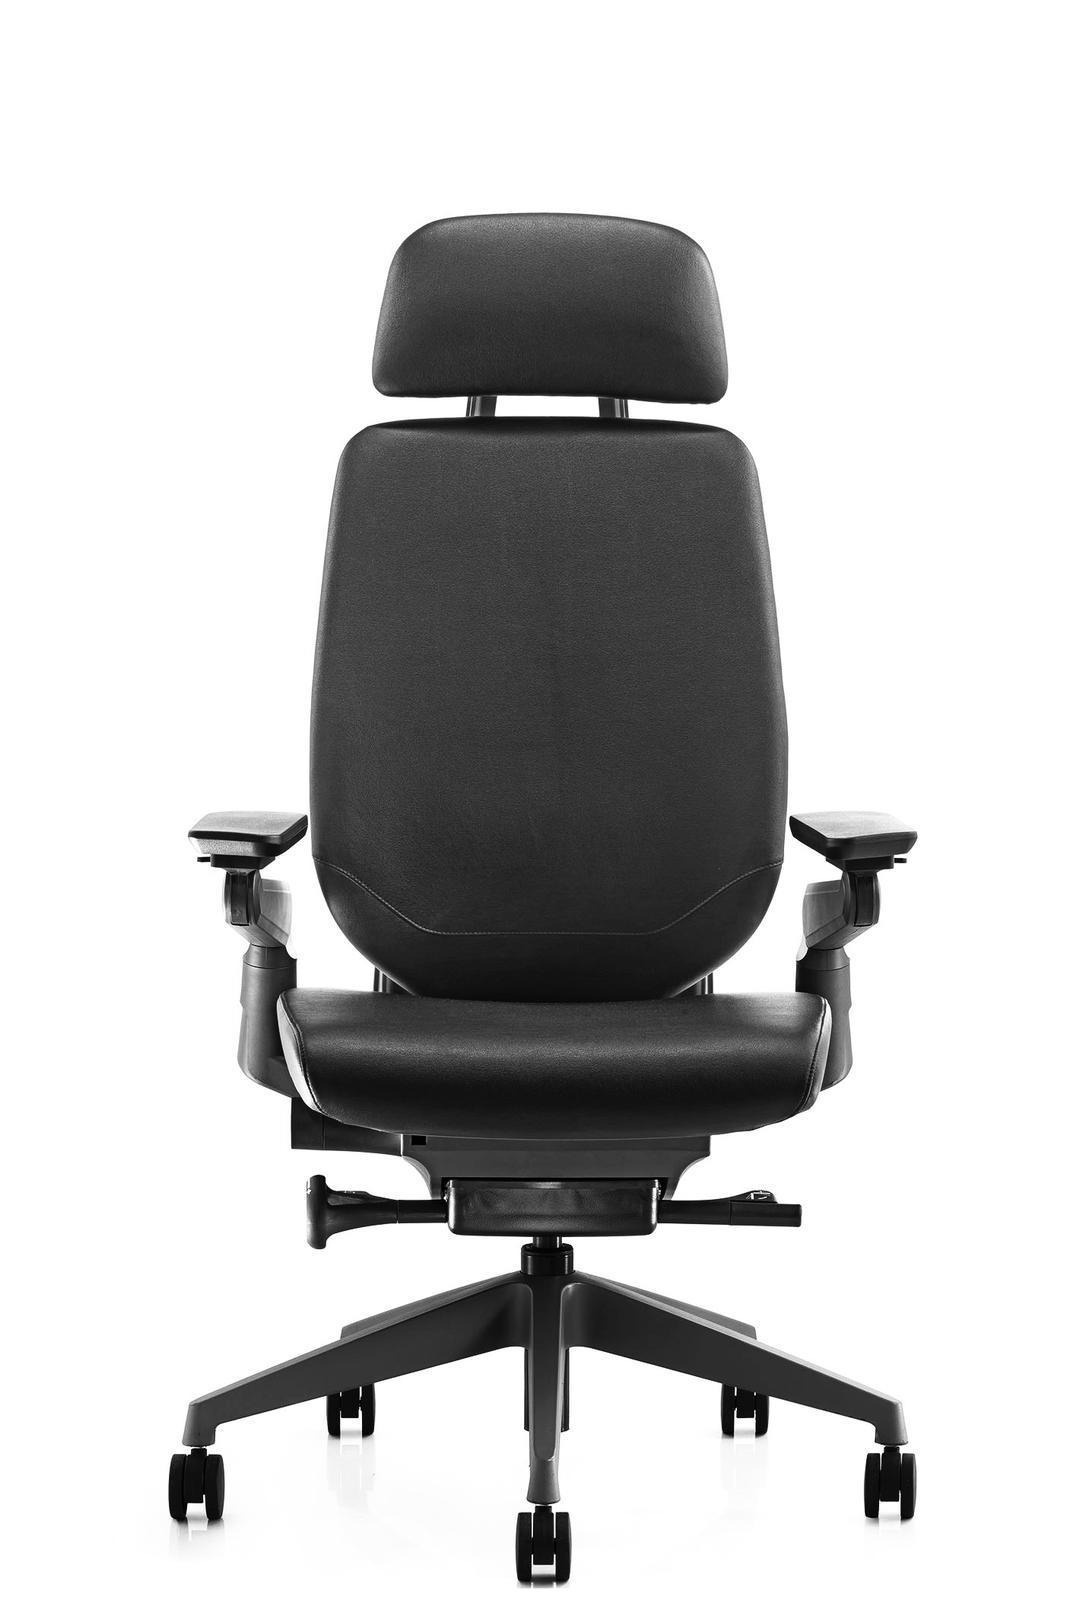 E-Transformer Office Ergonomic Gaming Chair人體工學椅 (Black Leather)